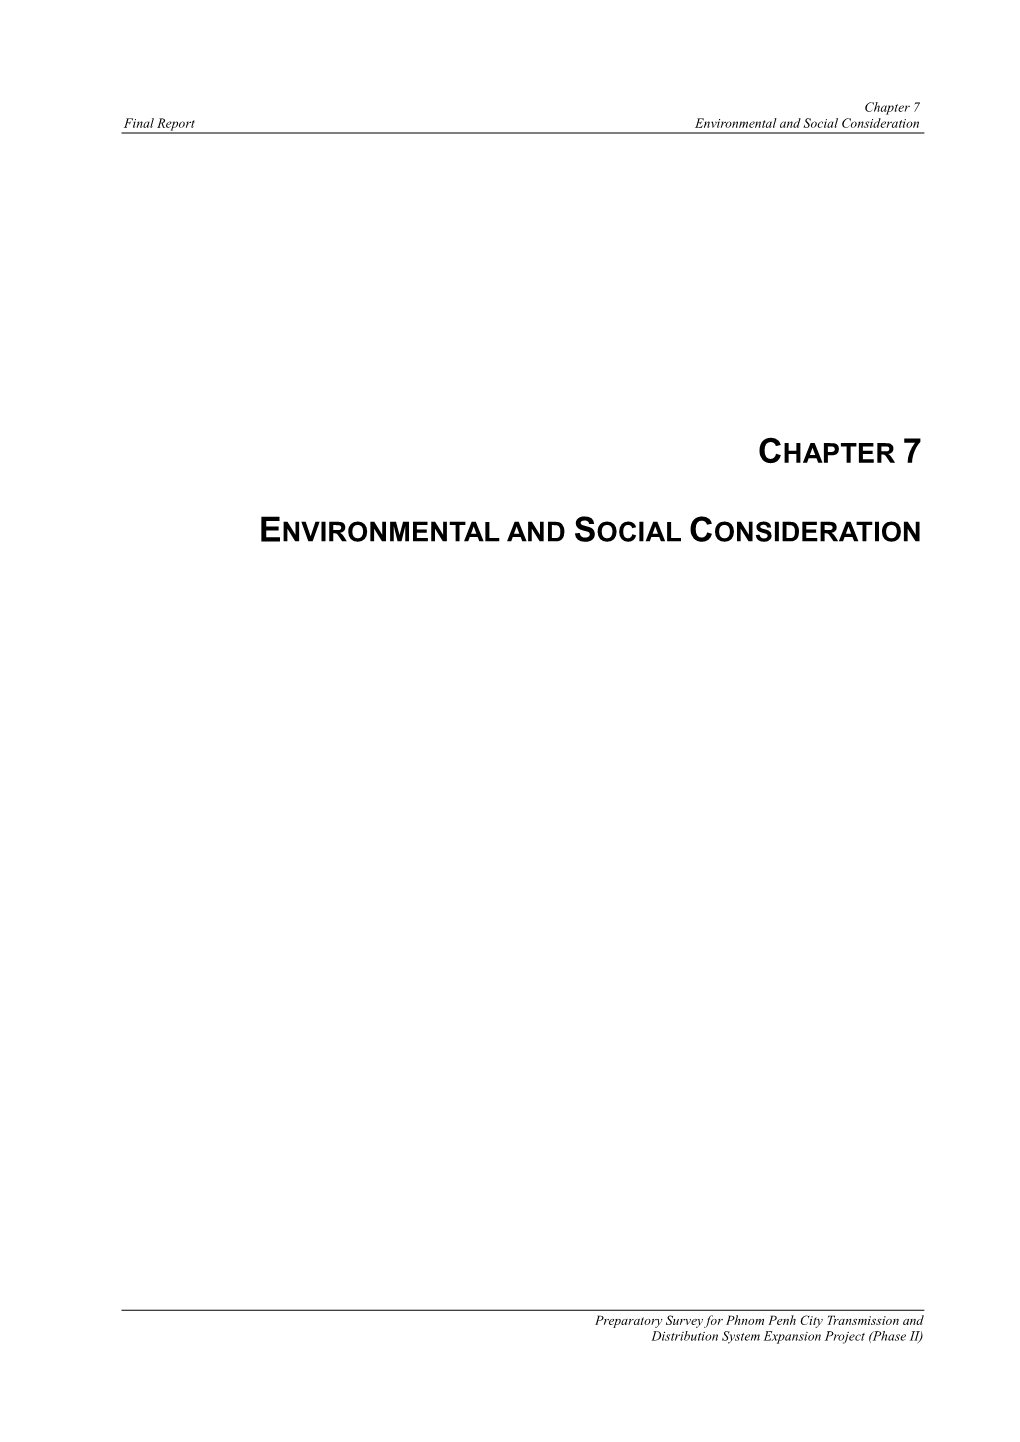 Chapter 7 Environmental and Social Consideration